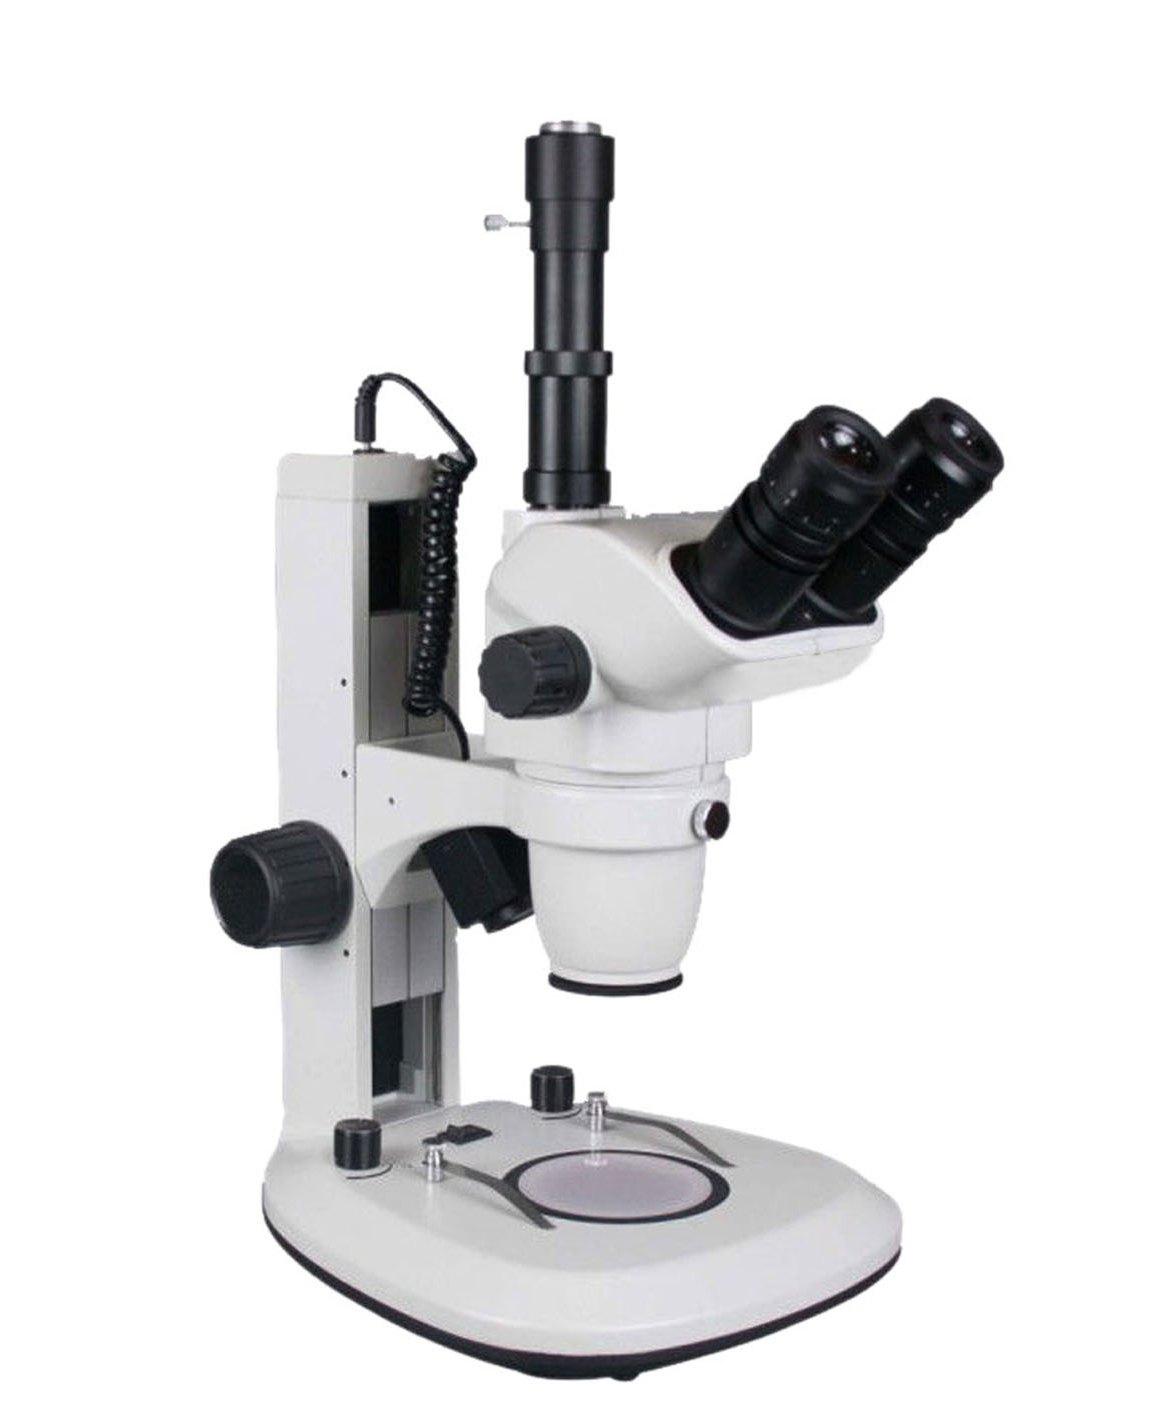 Advanced Stereo Microscope (15X & 45X Magnification)